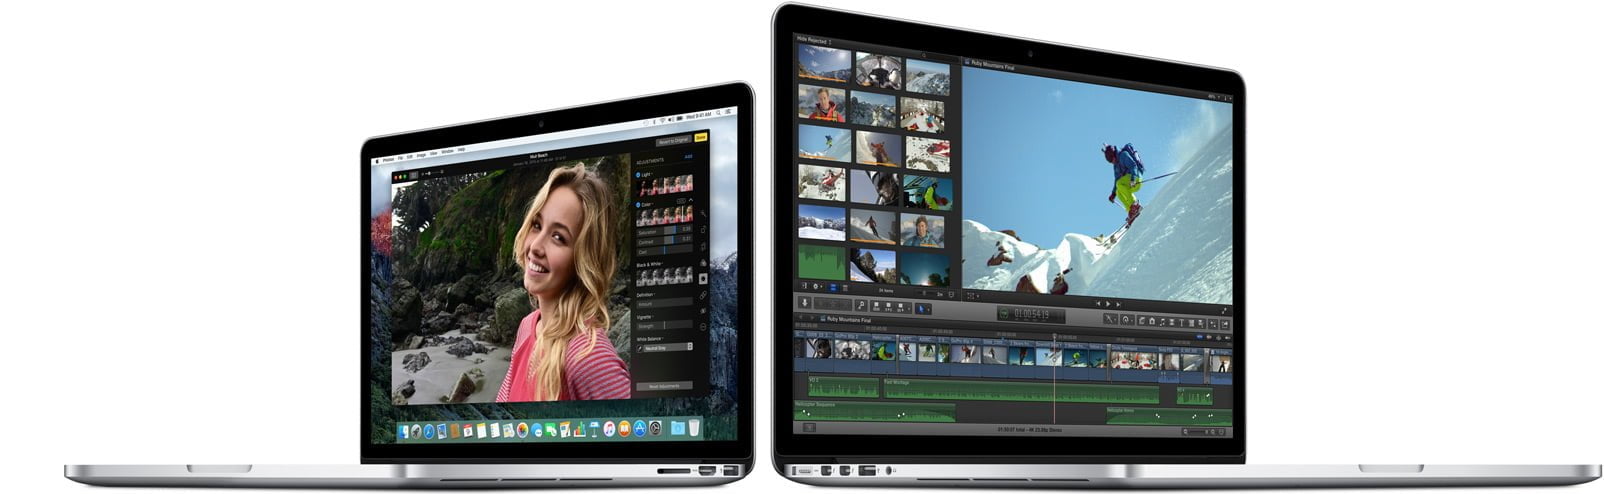 Apple-Macbook-Pro-retina